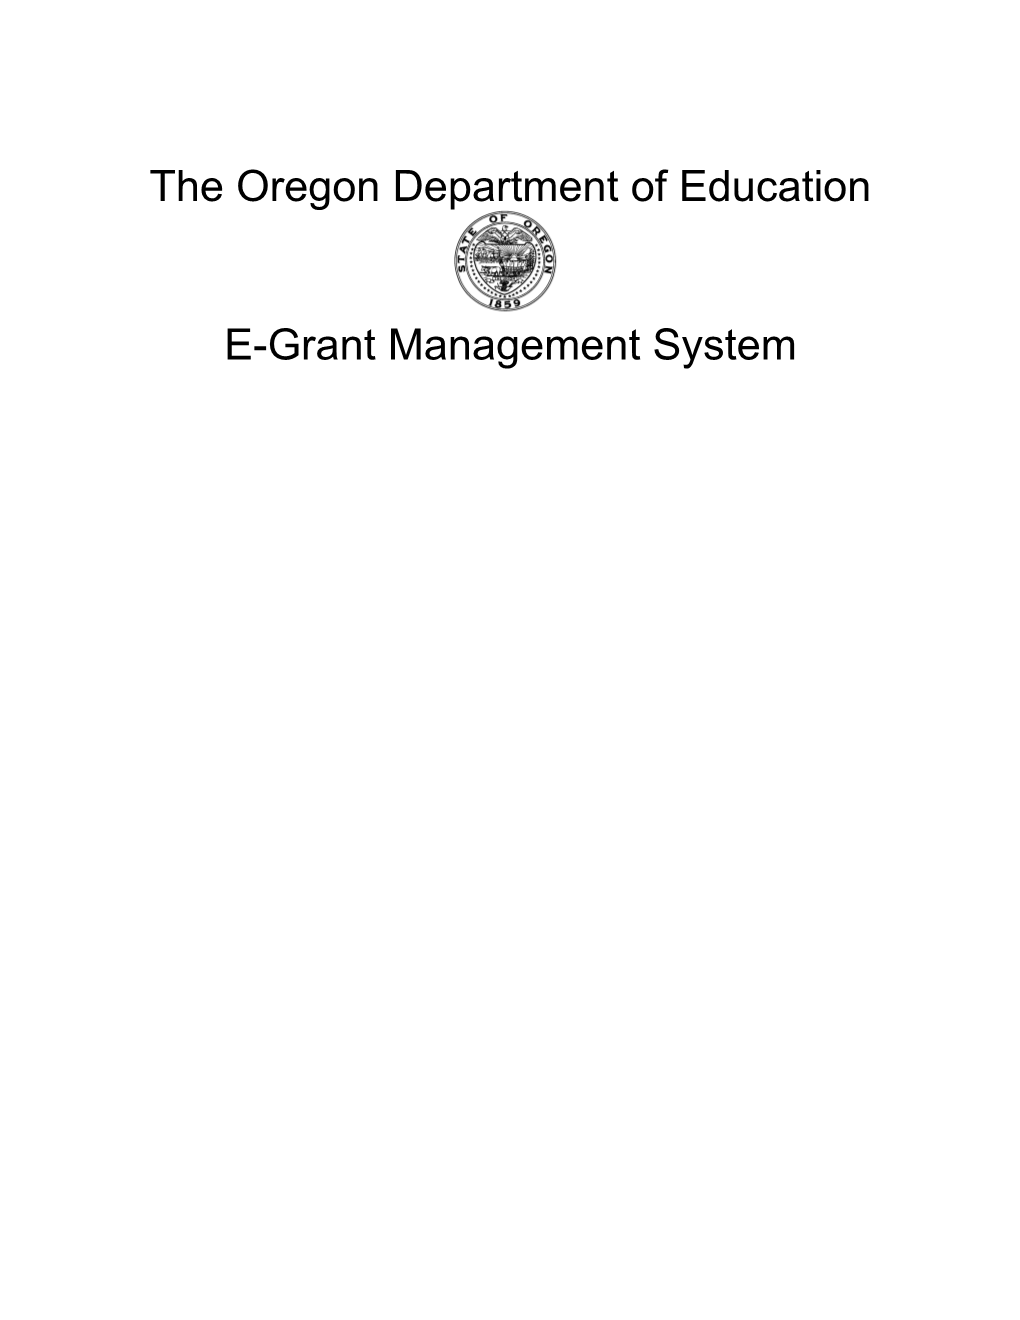 Oregon Department of Education s3